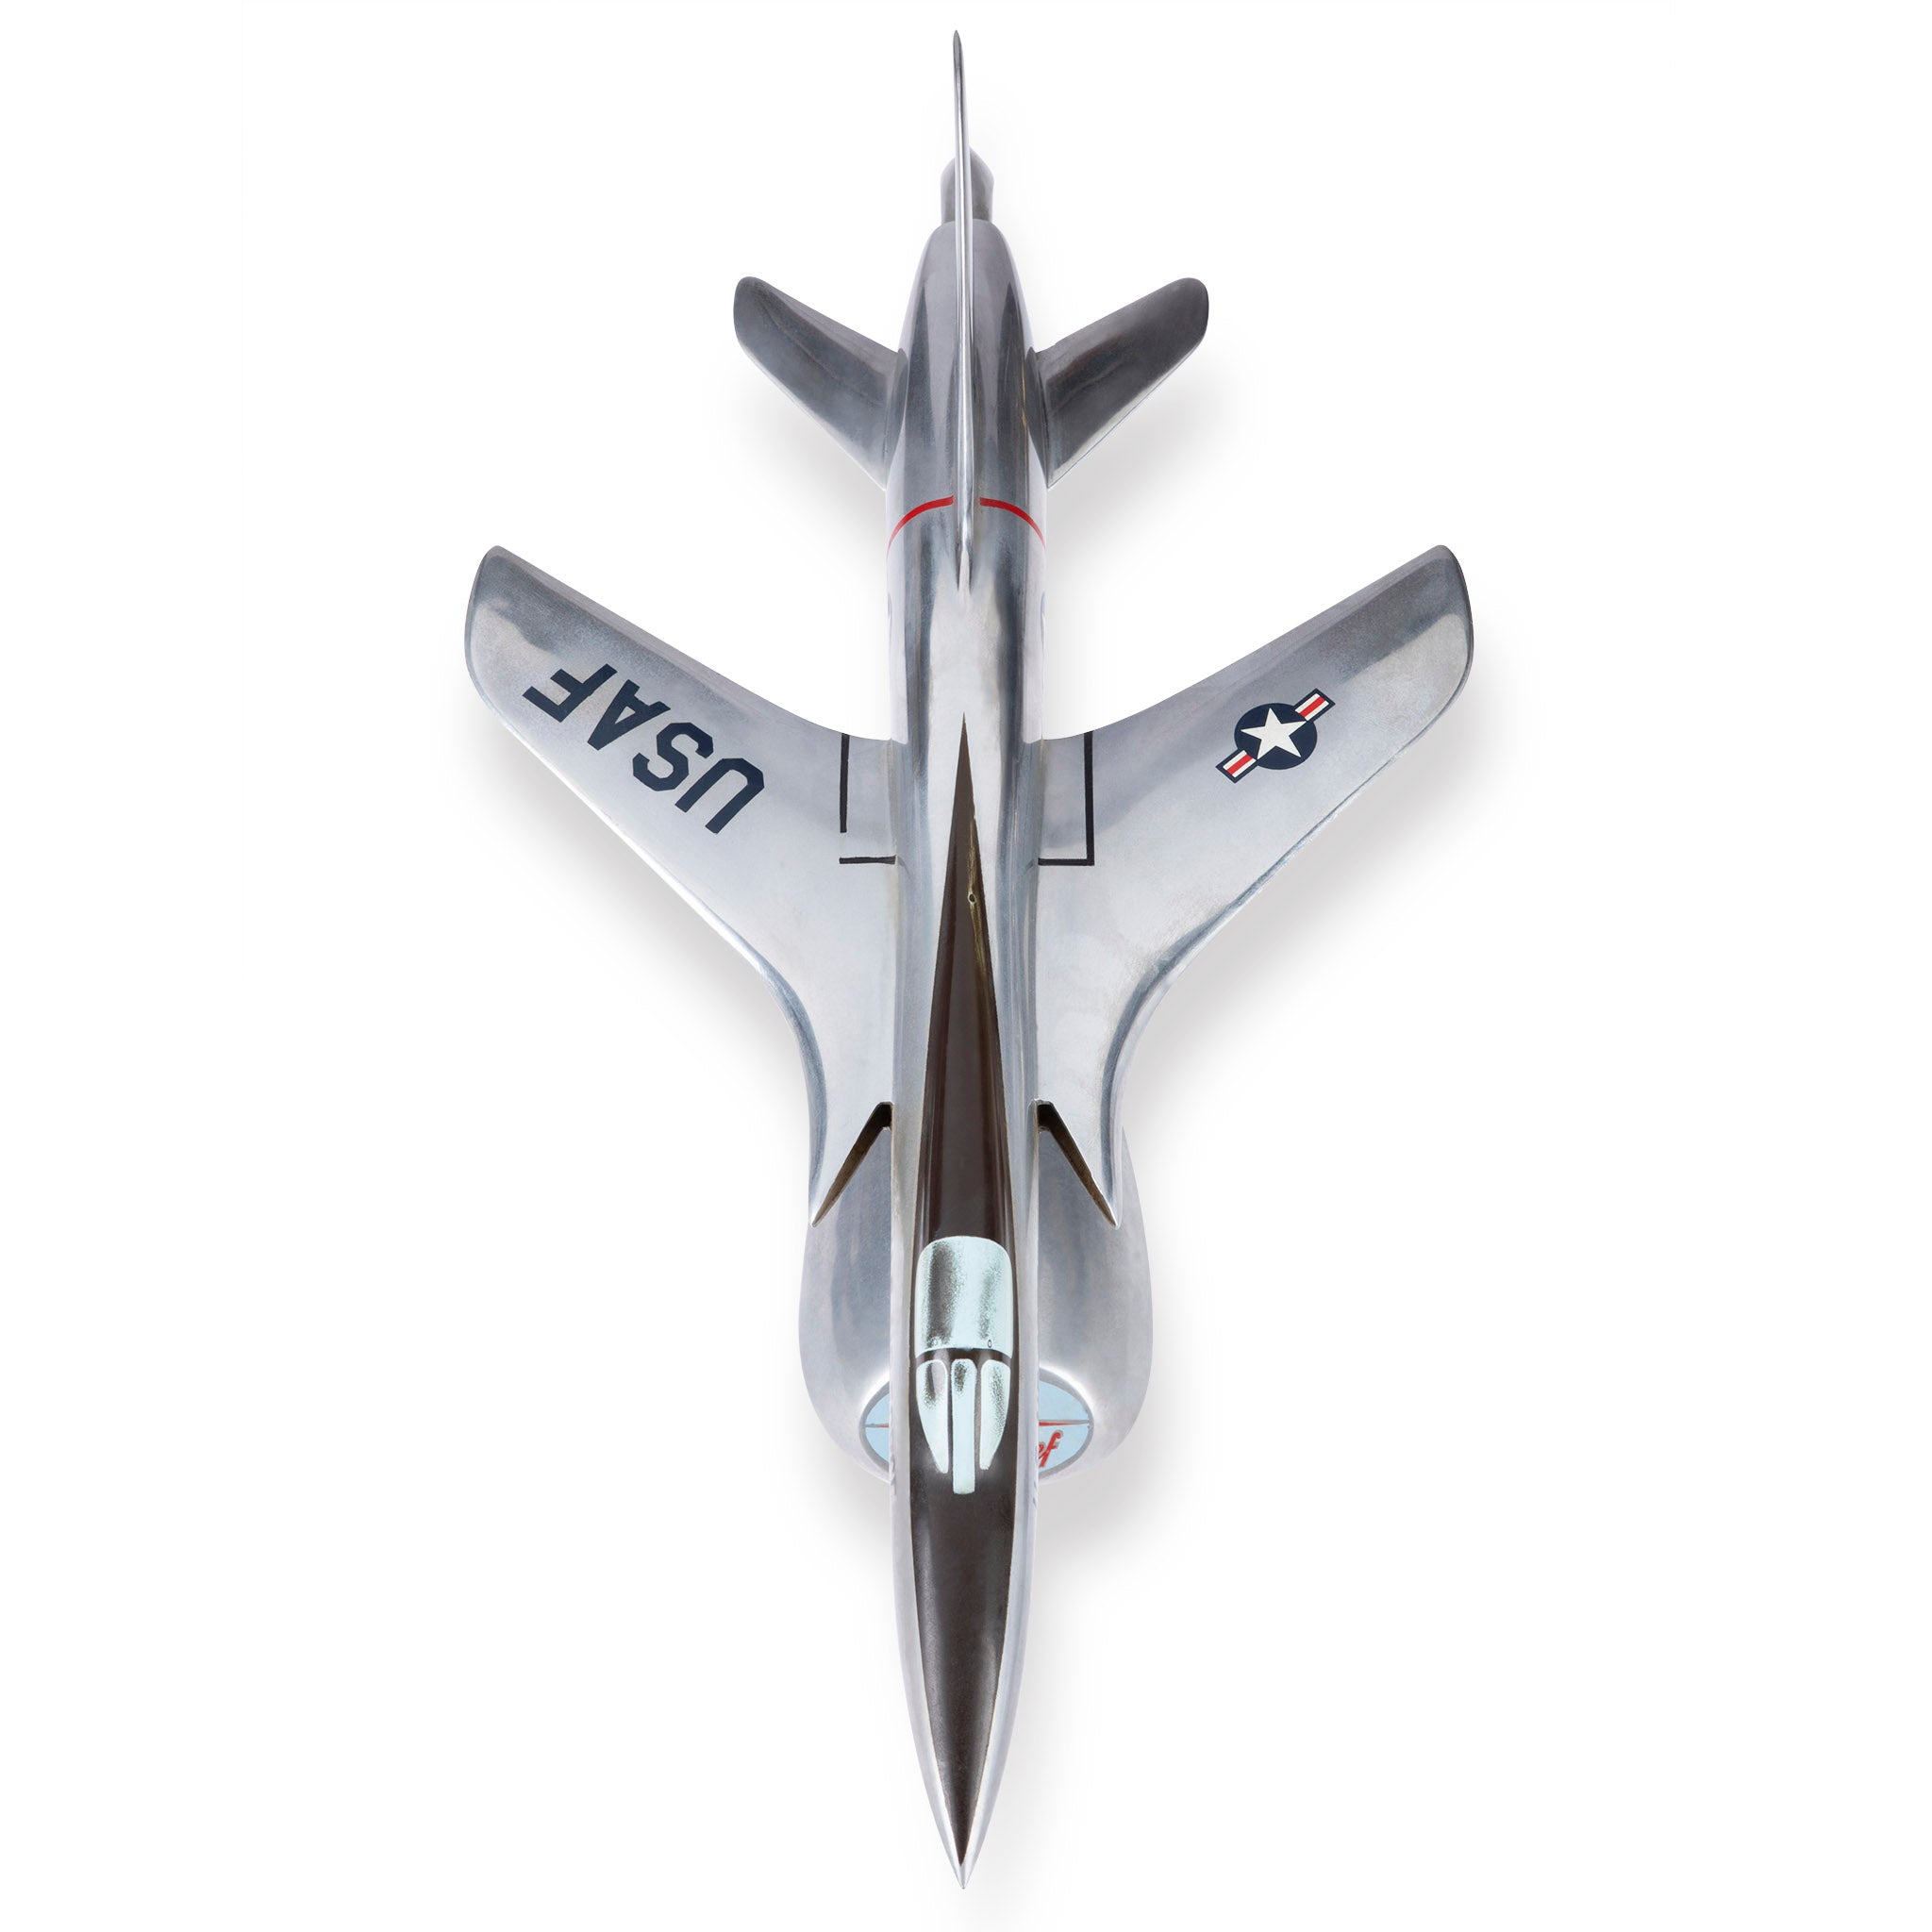 Republic F-105 Thunderchief Supersonic Fighter Bomber Desk Model